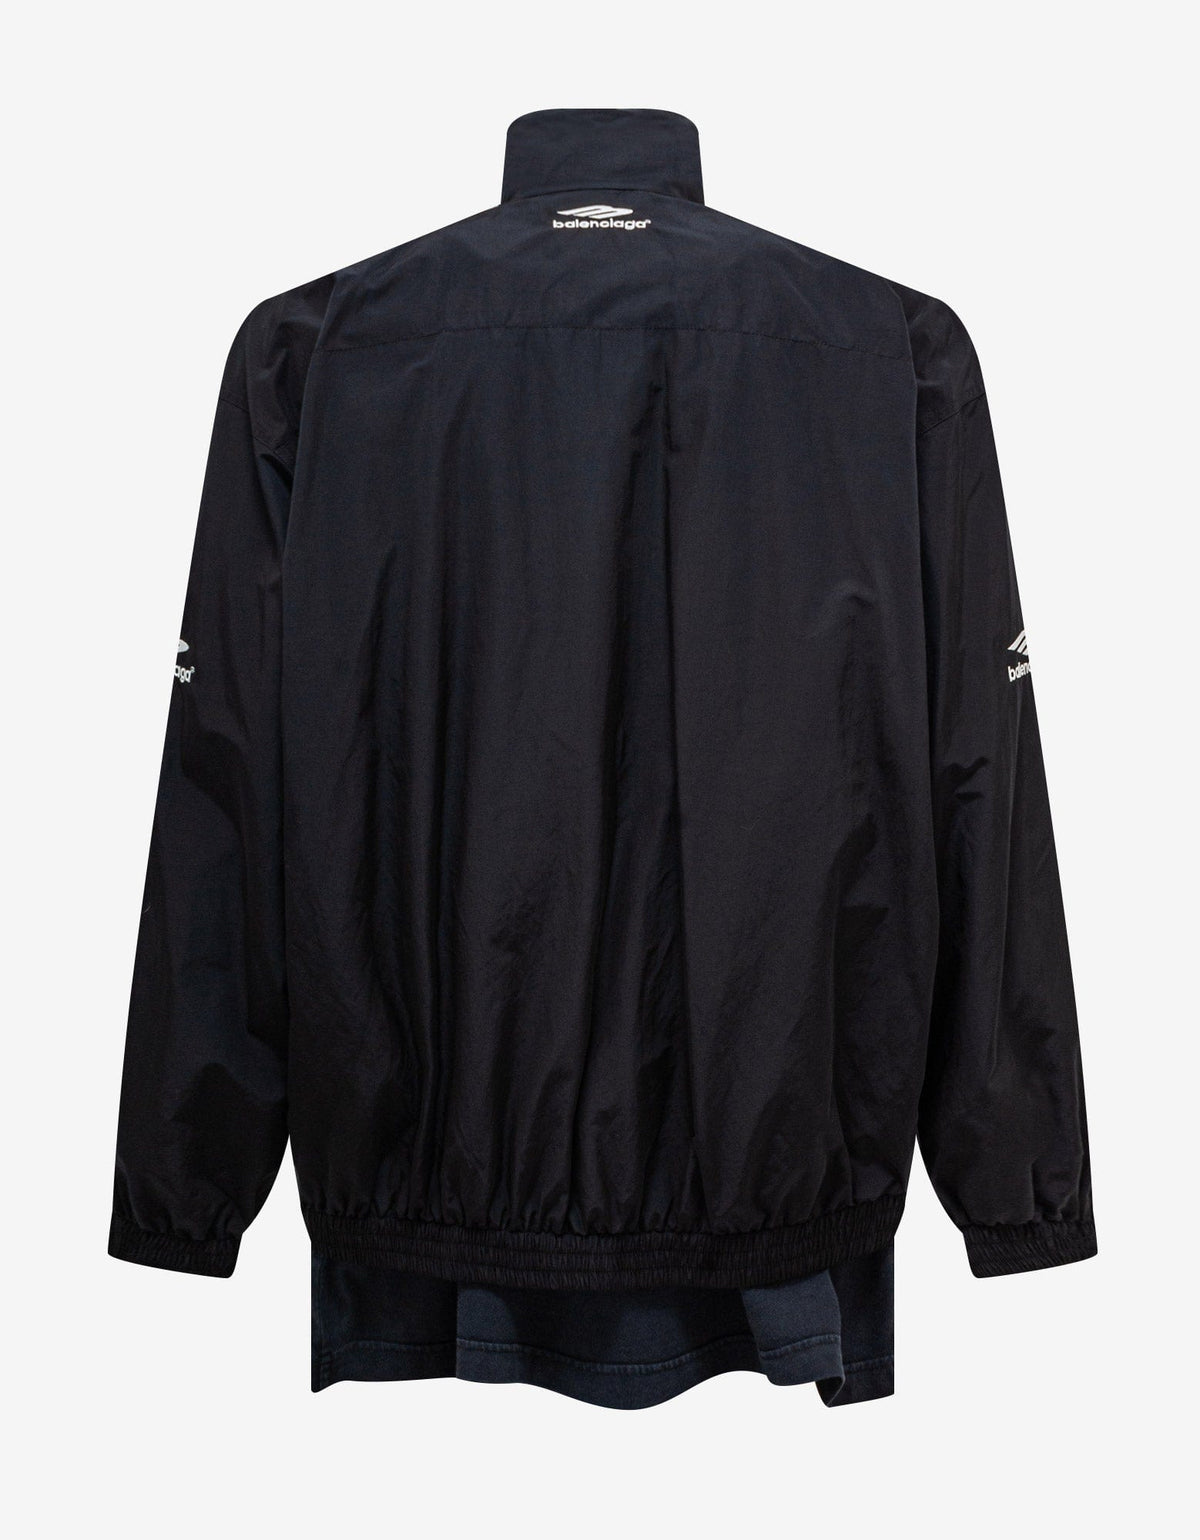 Balenciaga Black Patched Tracksuit Jacket